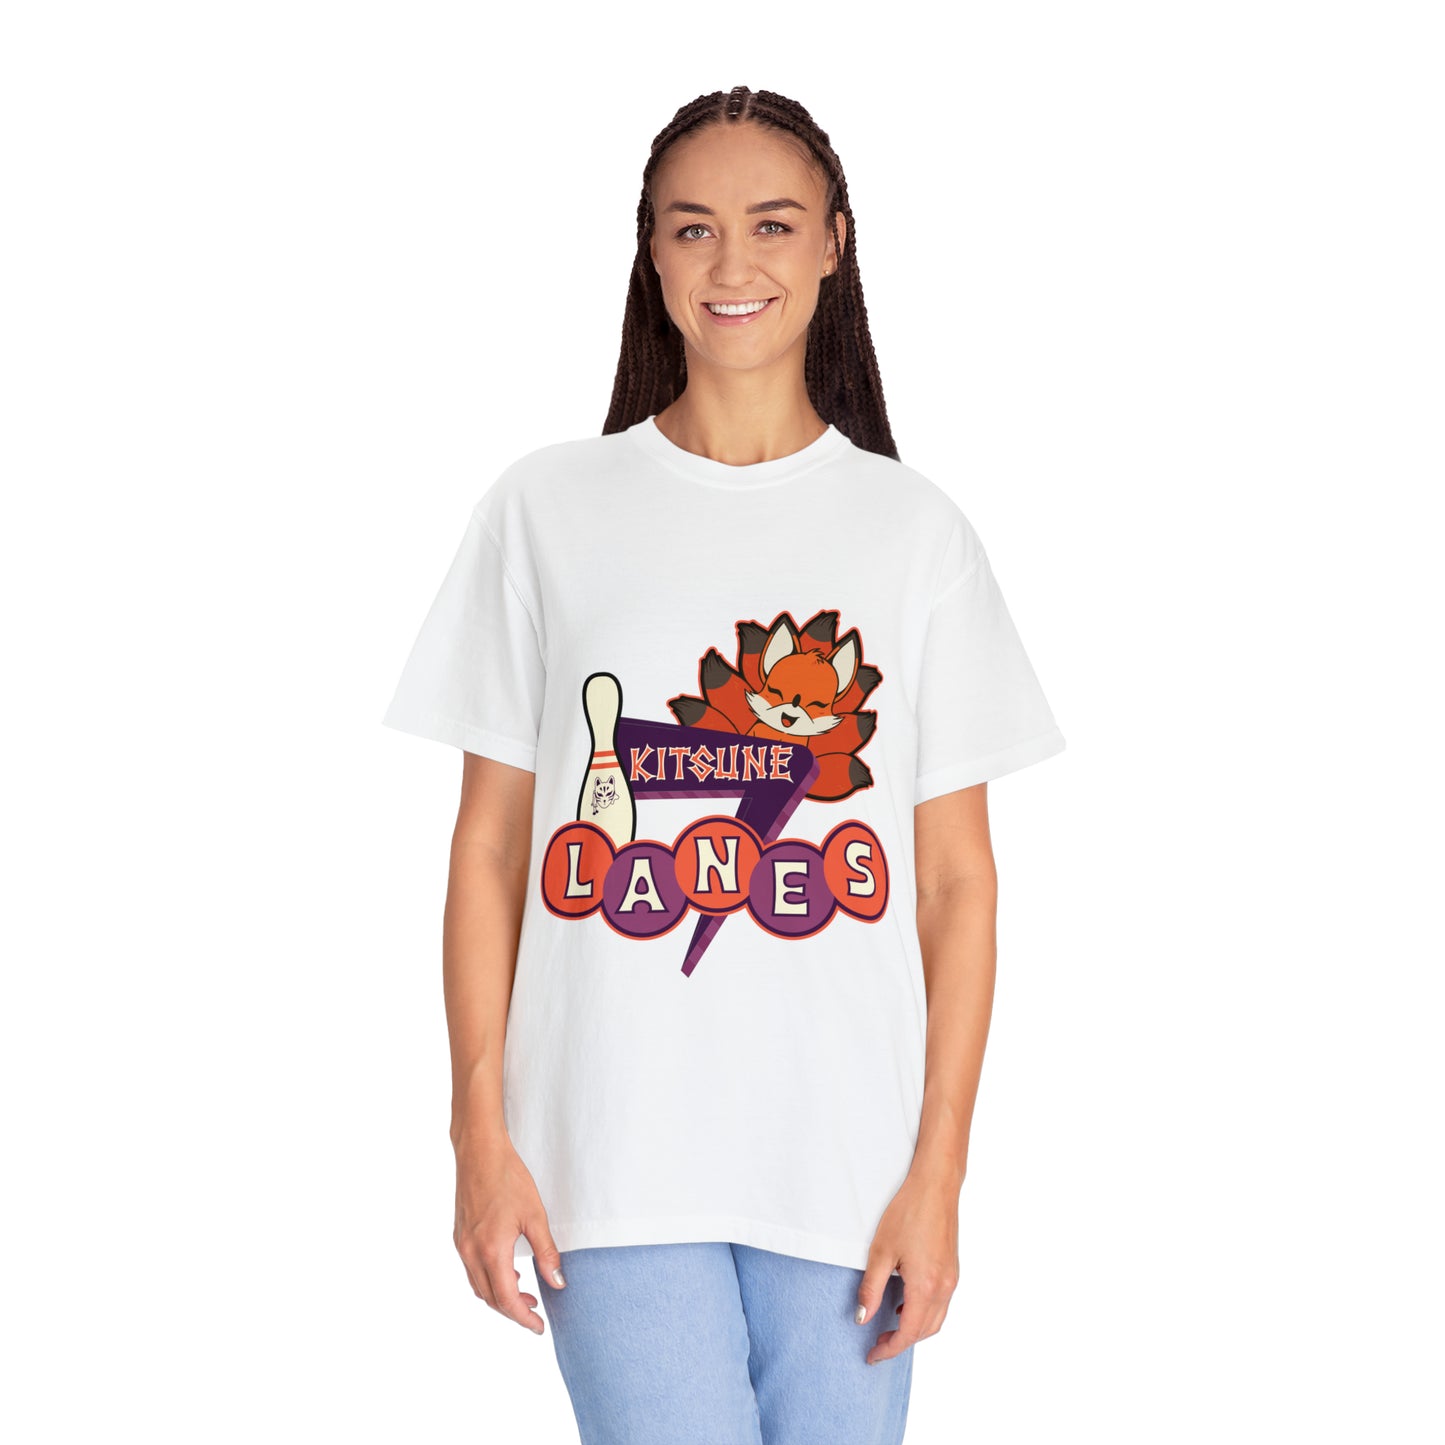 Unisex Kitsune Lanes Garment-Dyed T-shirt